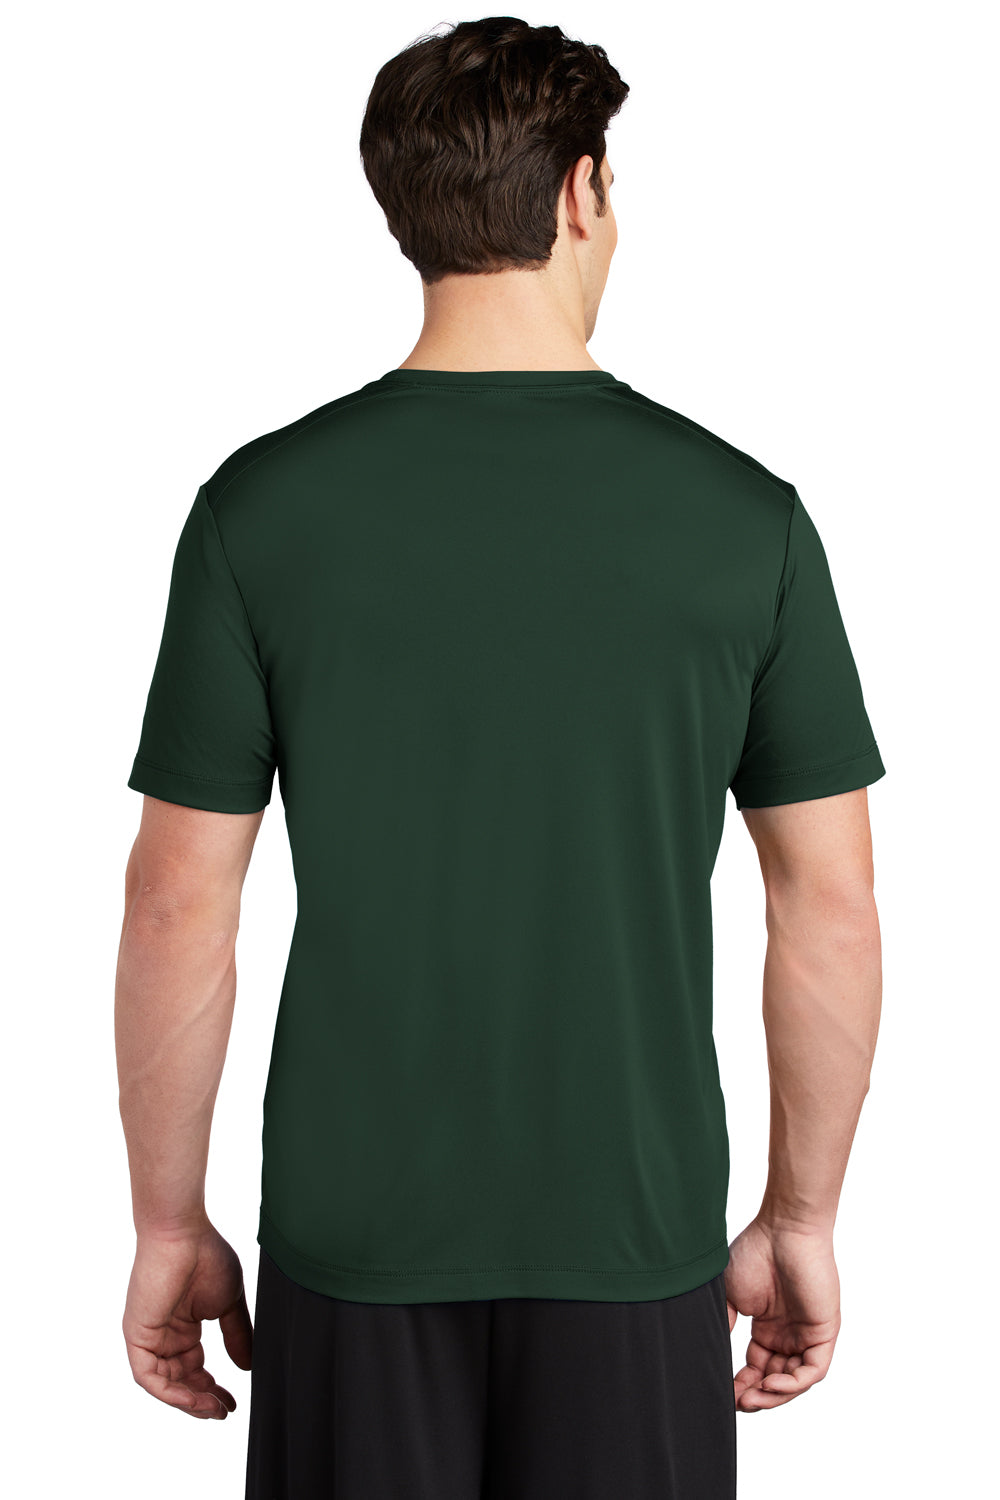 Sport-Tek Mens Short Sleeve Crewneck T-Shirt Forest Green Side